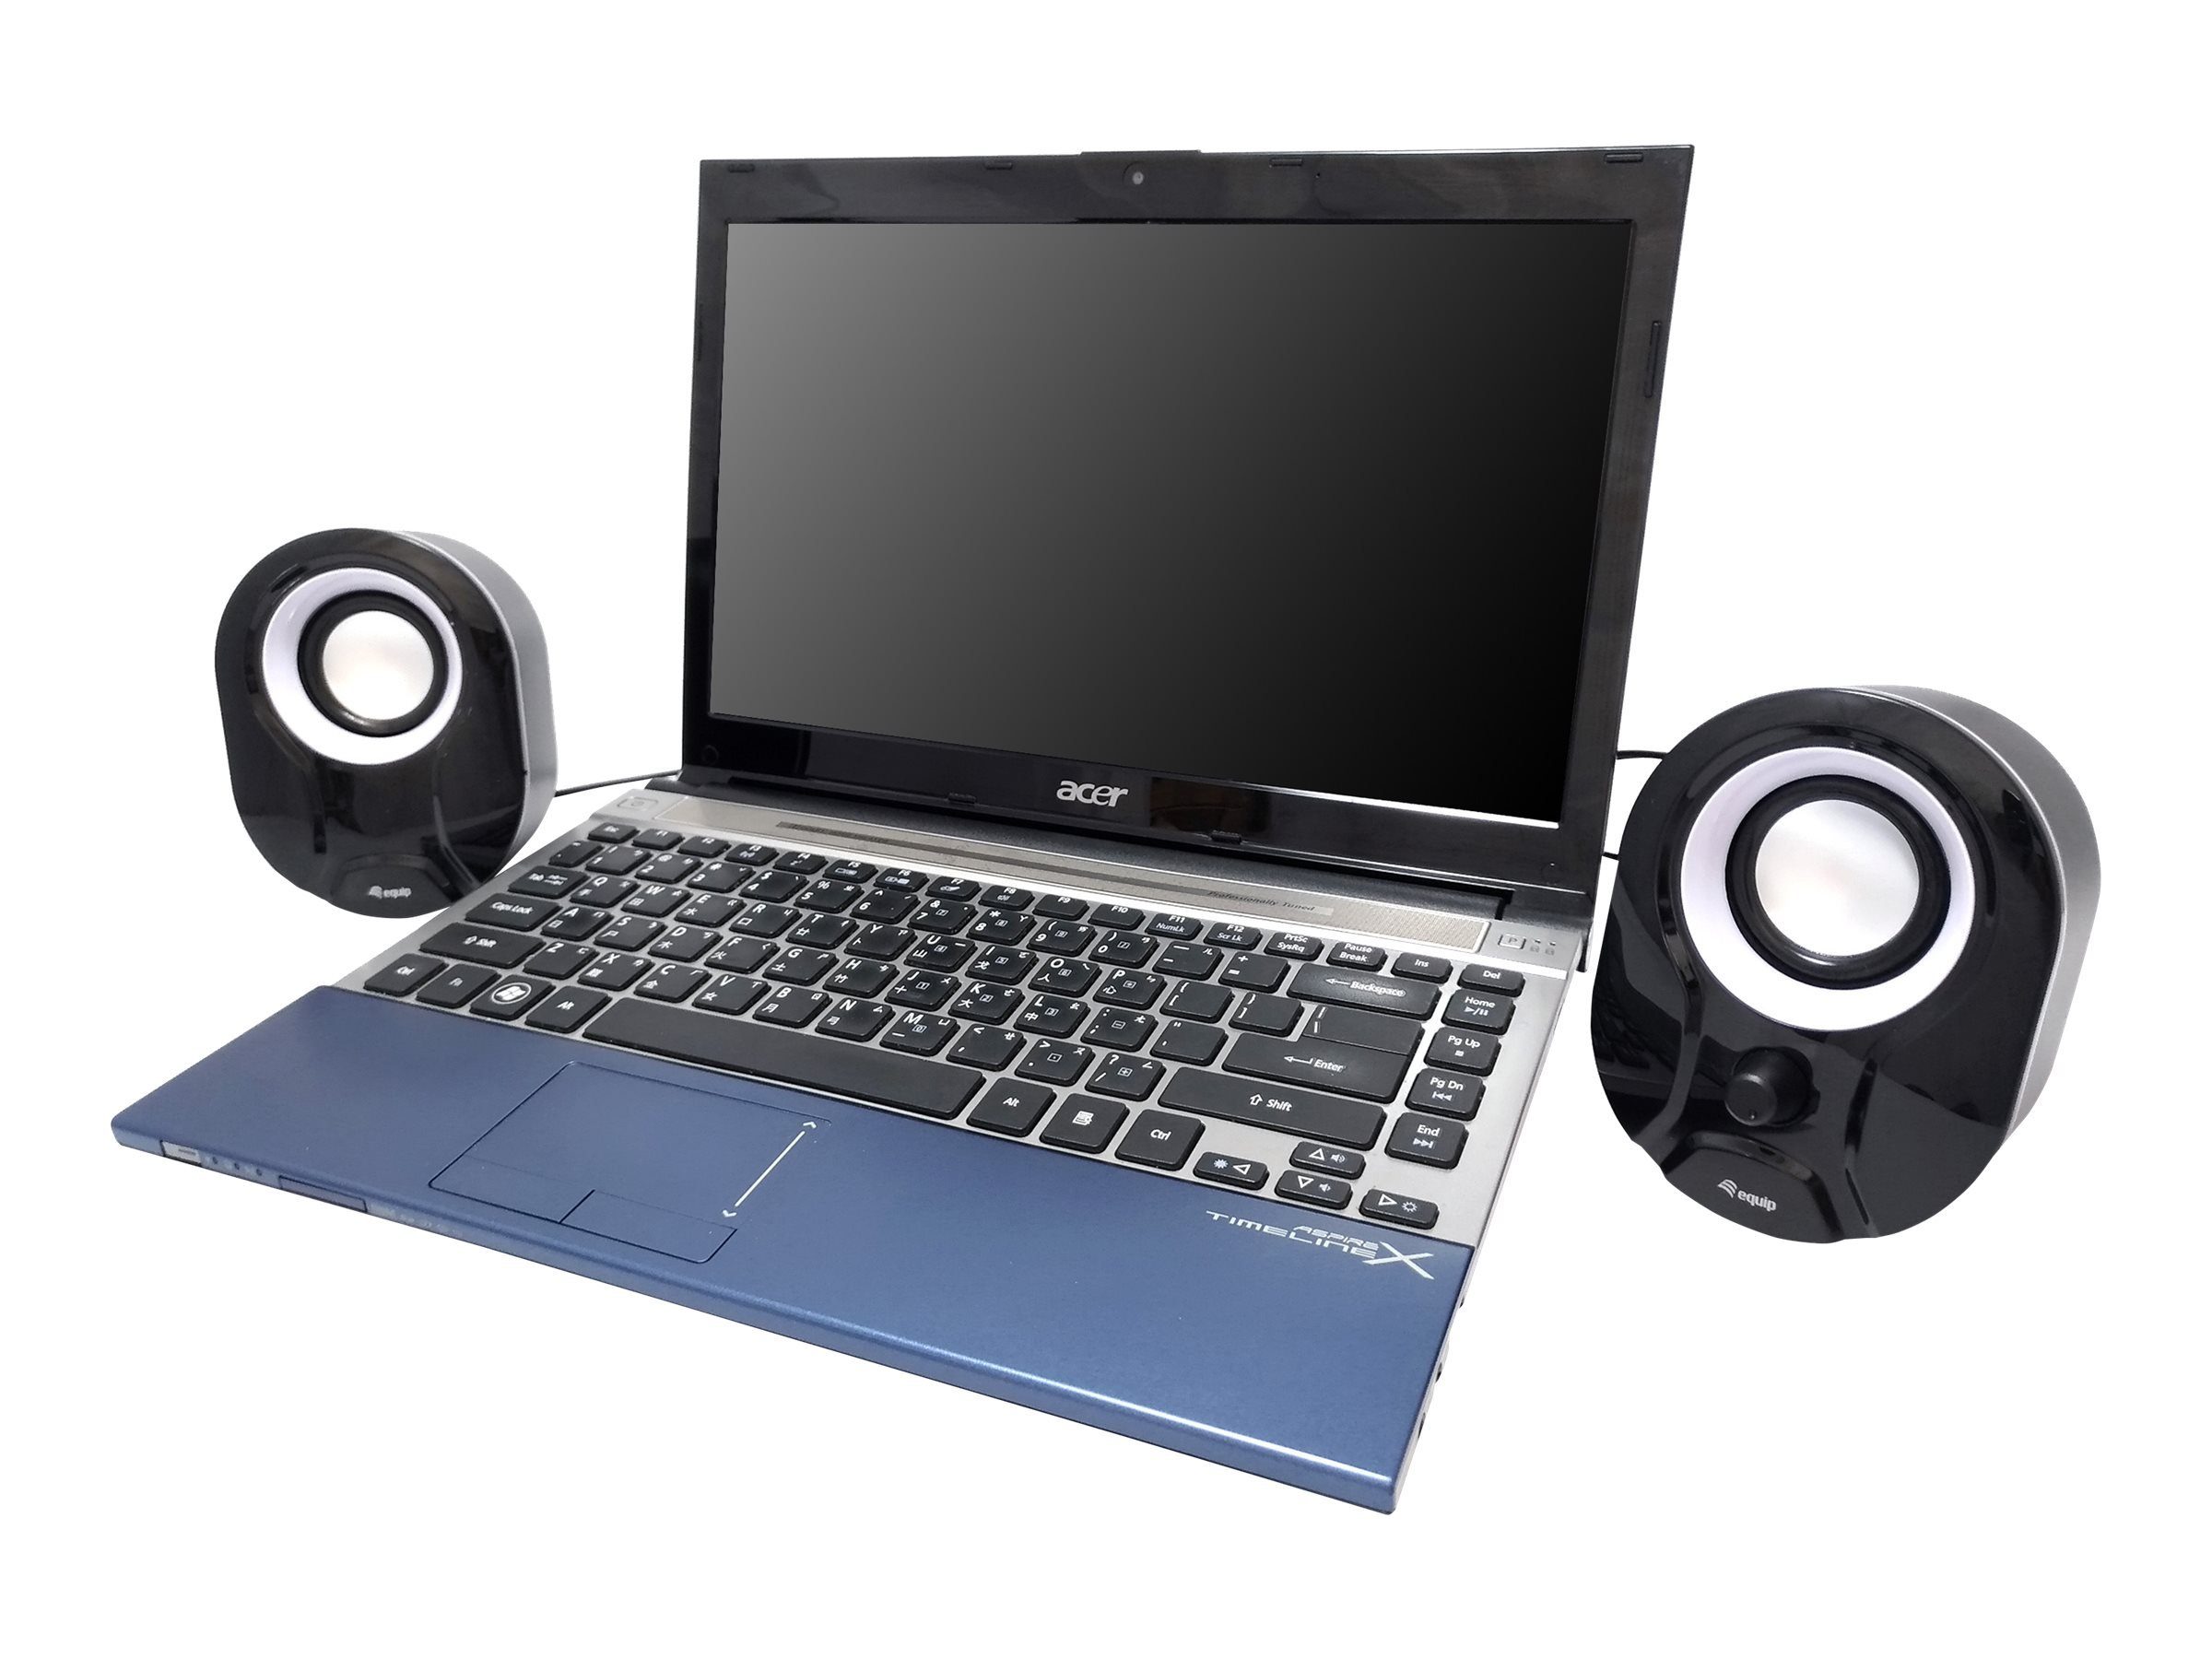 DIGITAL DATA EQUIP Stereo 2.0 Lautsprecher f. Notebook u. PC, schwarz/wei PC-Lautsprecher | PC-Lautsprecher